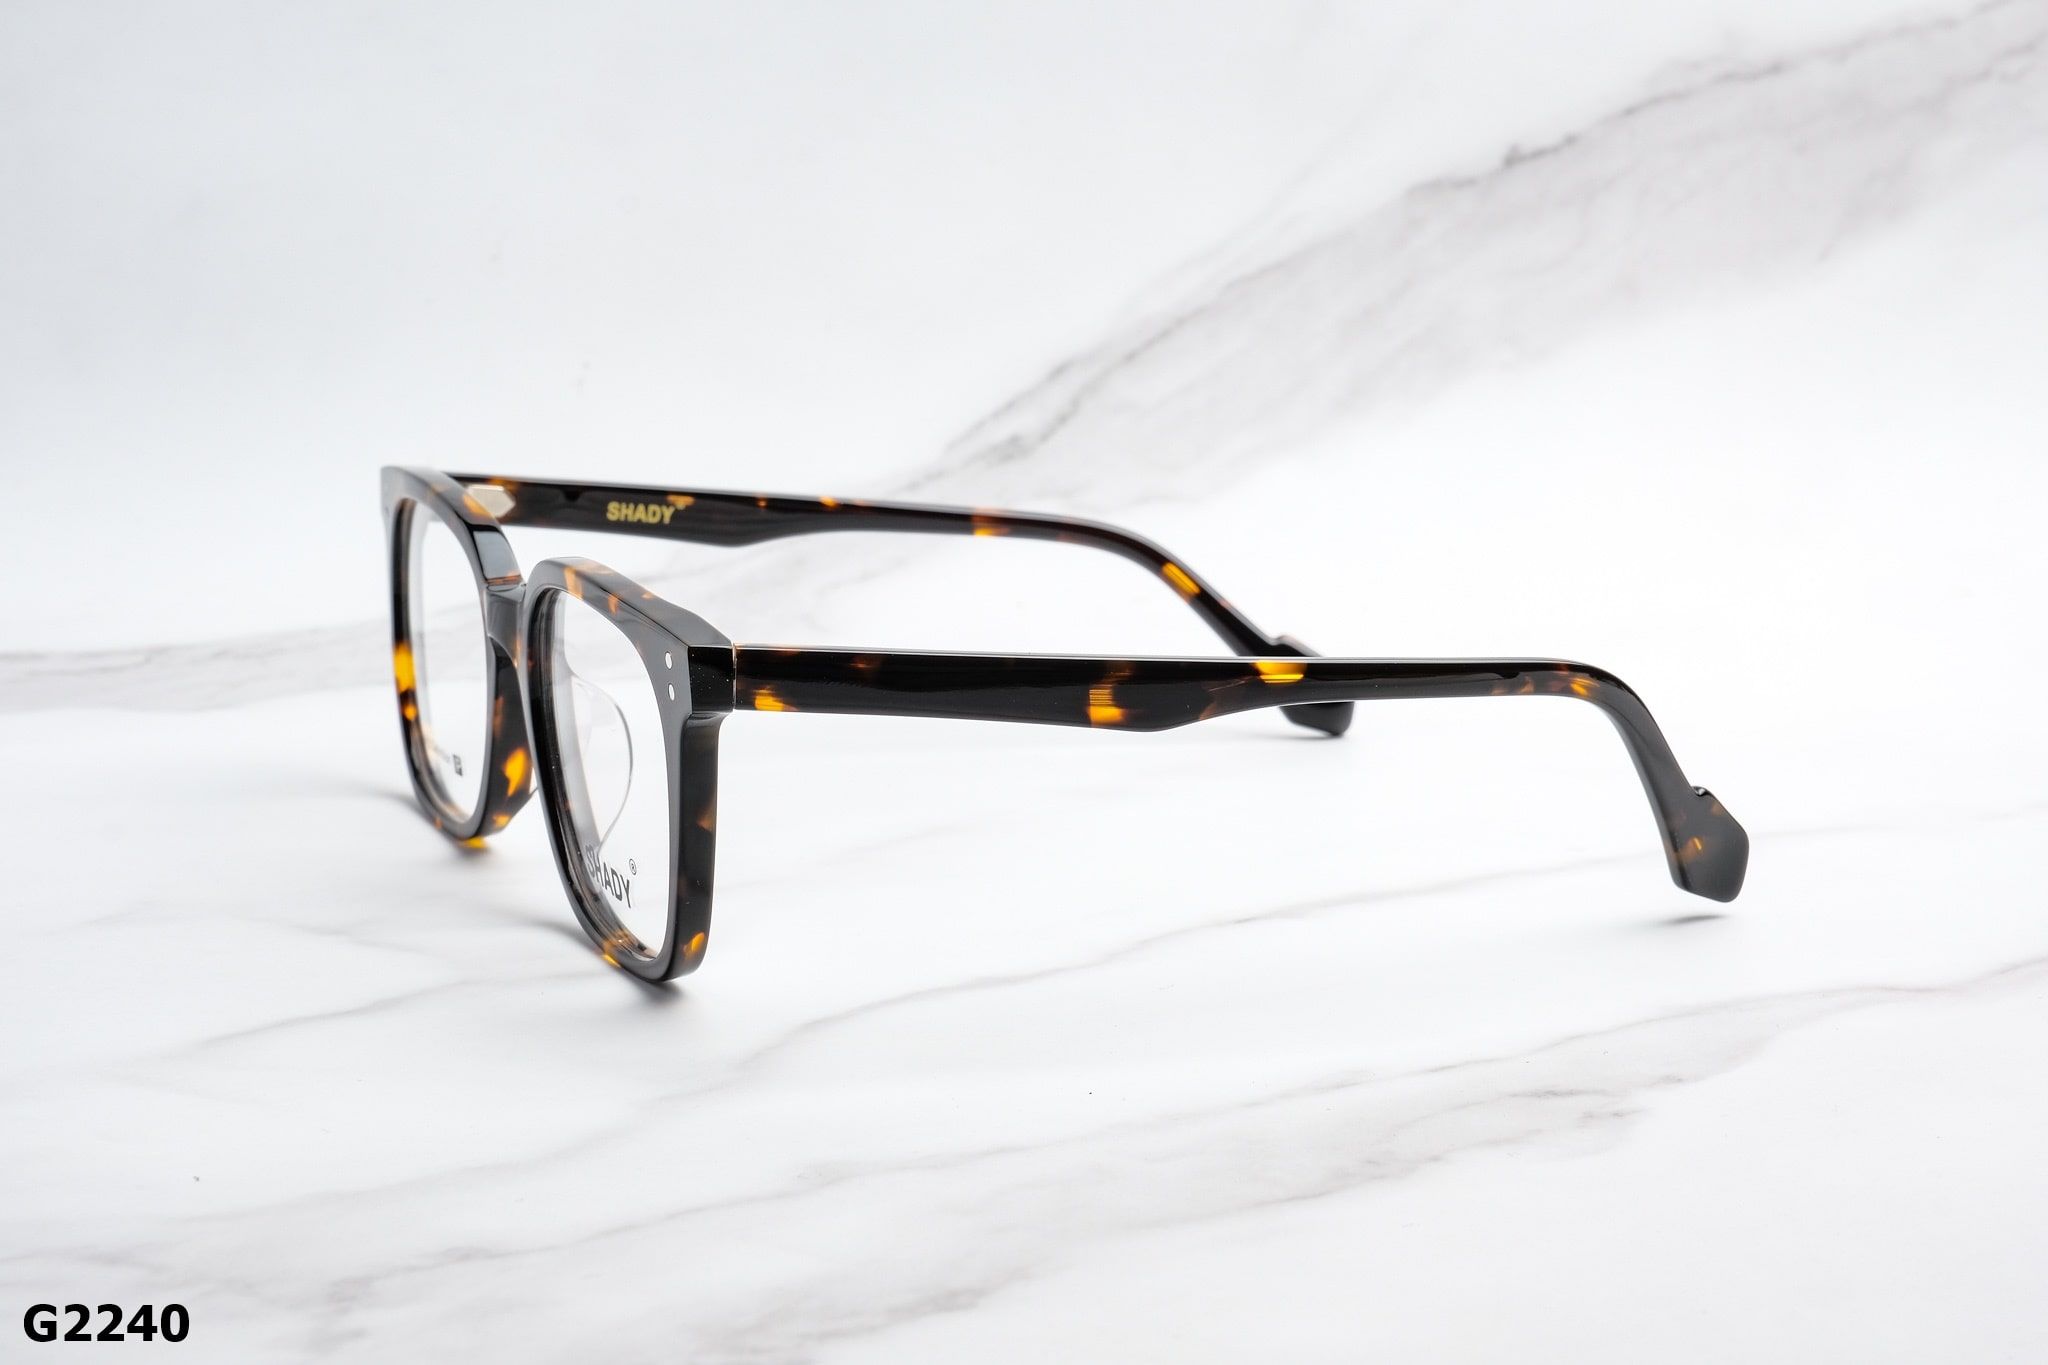  SHADY Eyewear - Glasses - G2240 